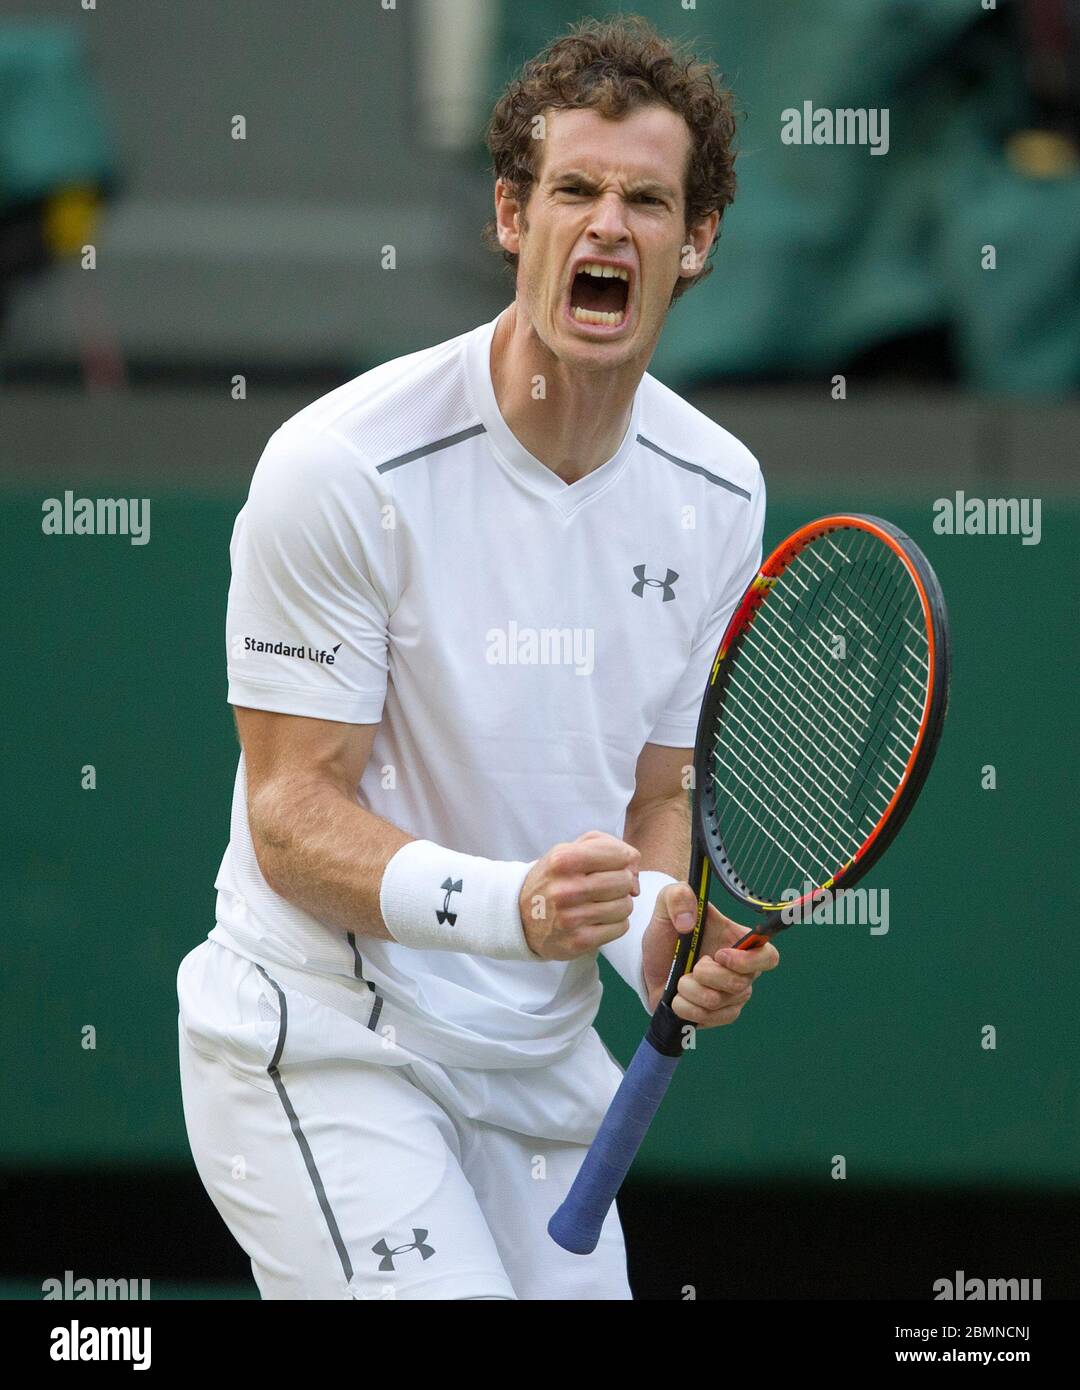 4 de julio de 2015, Campeonato de Wimbledon, Londres. Hombres solteros tercera ronda, Center Court, Andy Murray (GBR) celebra contra Andreas Seppi (ITA) Foto de stock